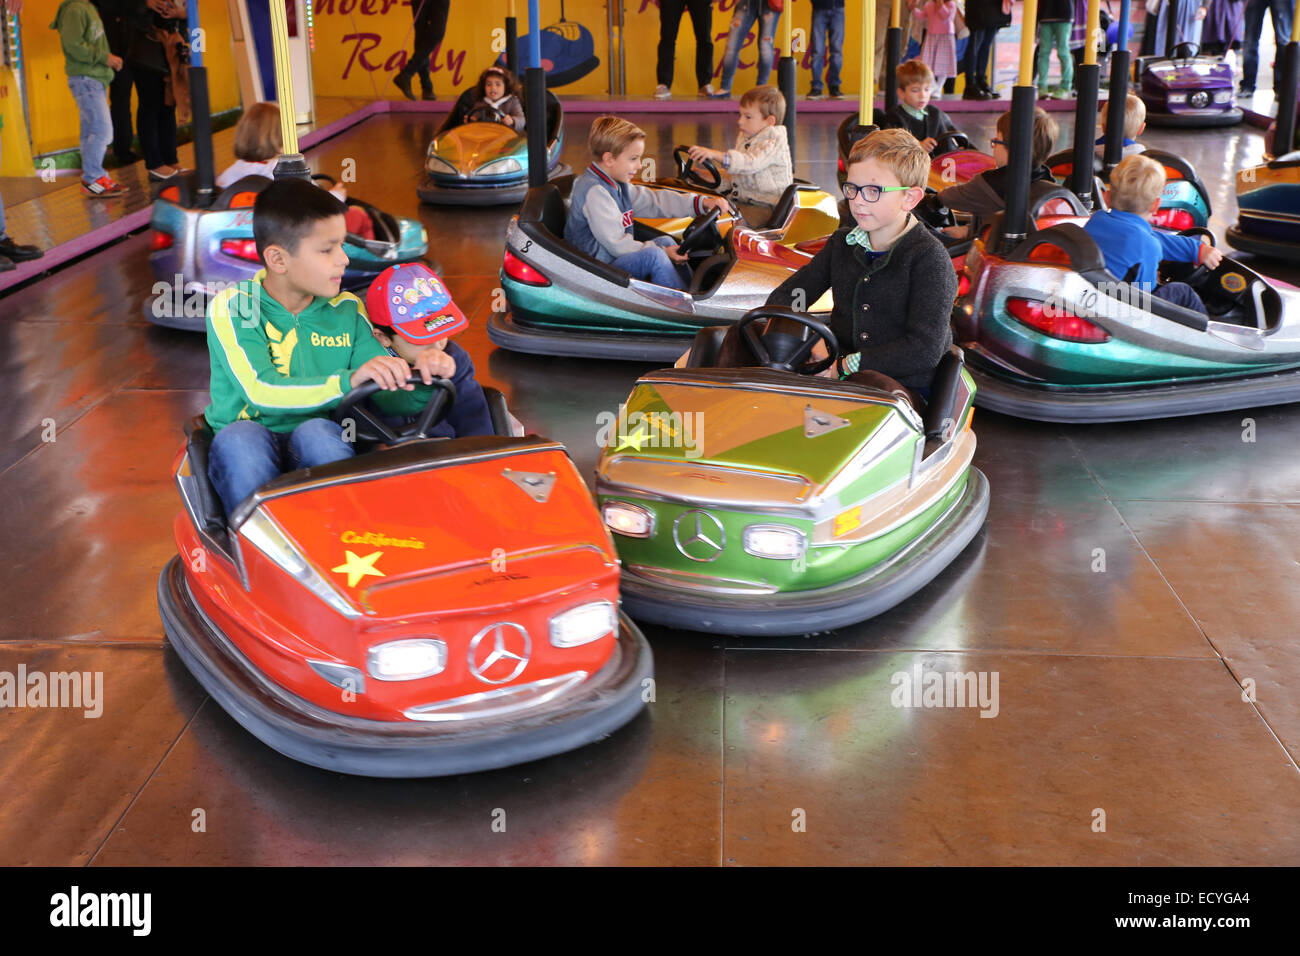 https://c8.alamy.com/comp/ECYGA4/young-boy-bumper-car-amusement-park-europe-ECYGA4.jpg